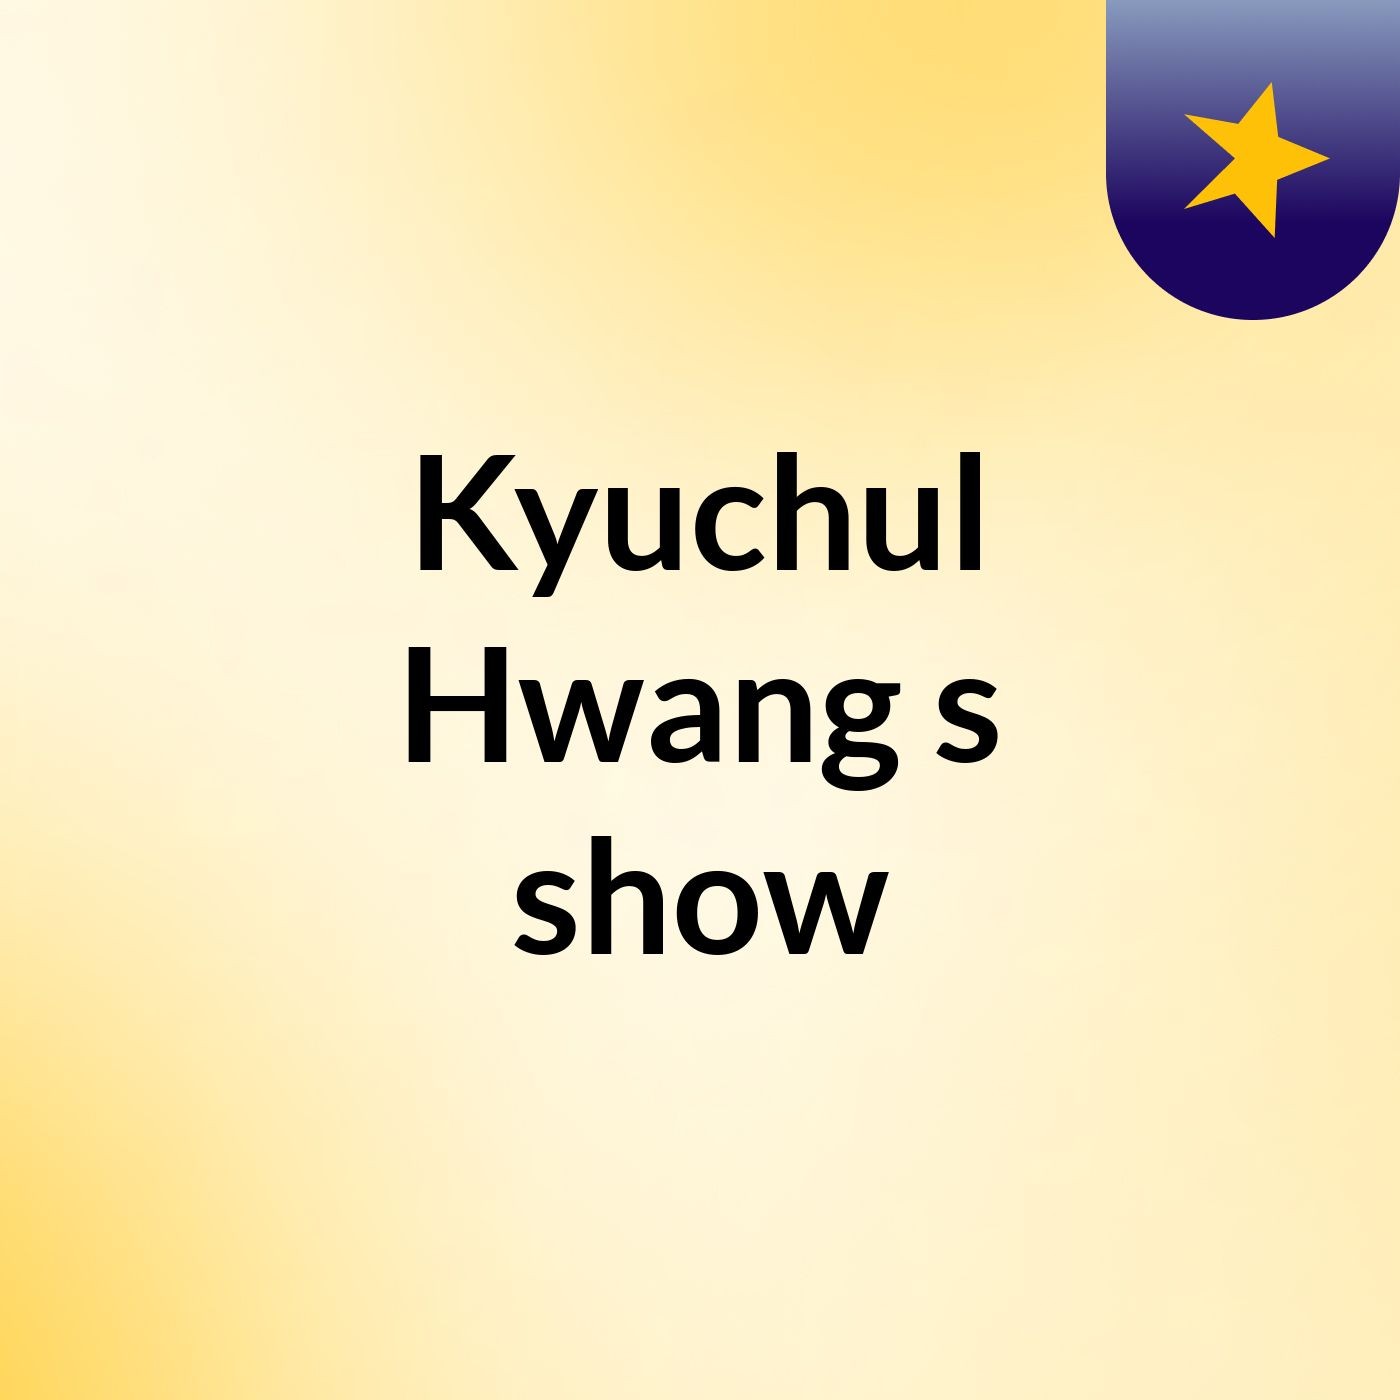 Kyuchul Hwang's show